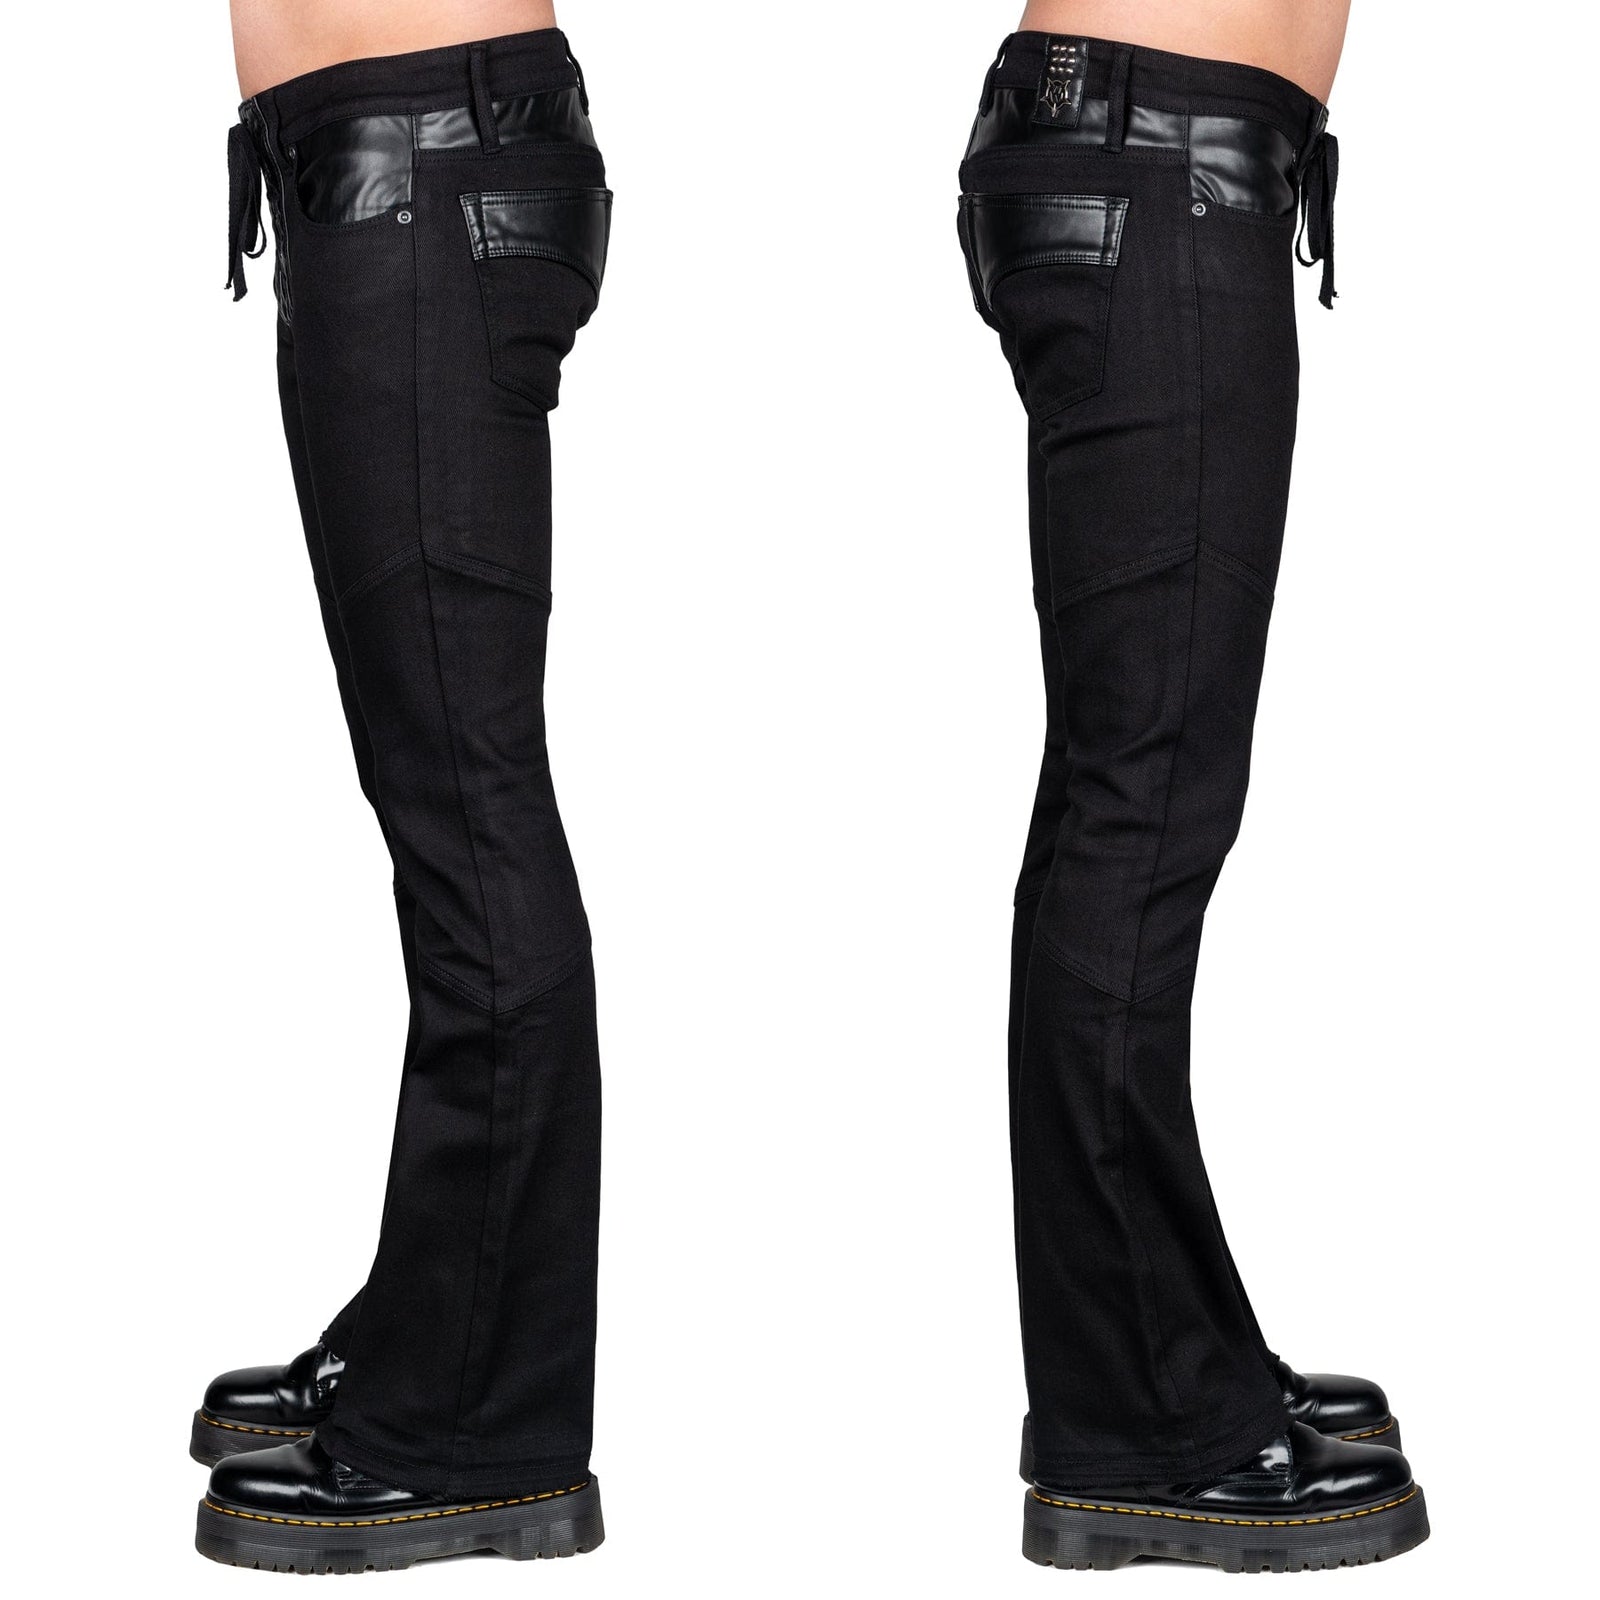 Wornstar Clothing Troubadour Stage Jeans - Black